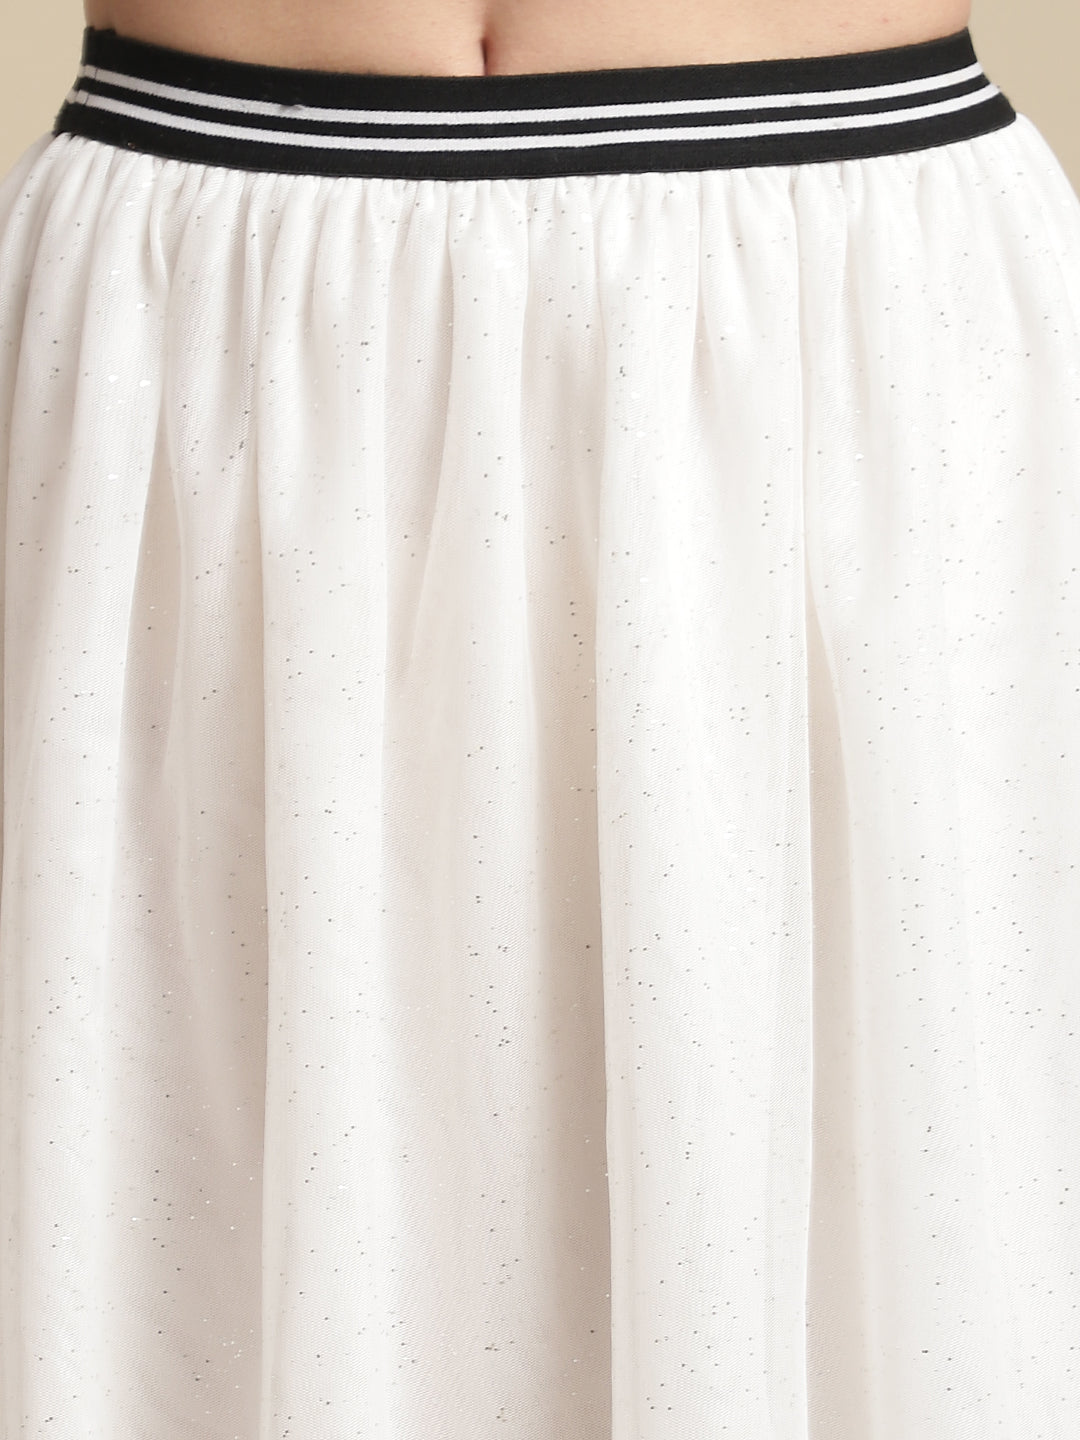 Blanc9 Black Crop Top With Mesh Skirt Co-Ord Set-B9ST94